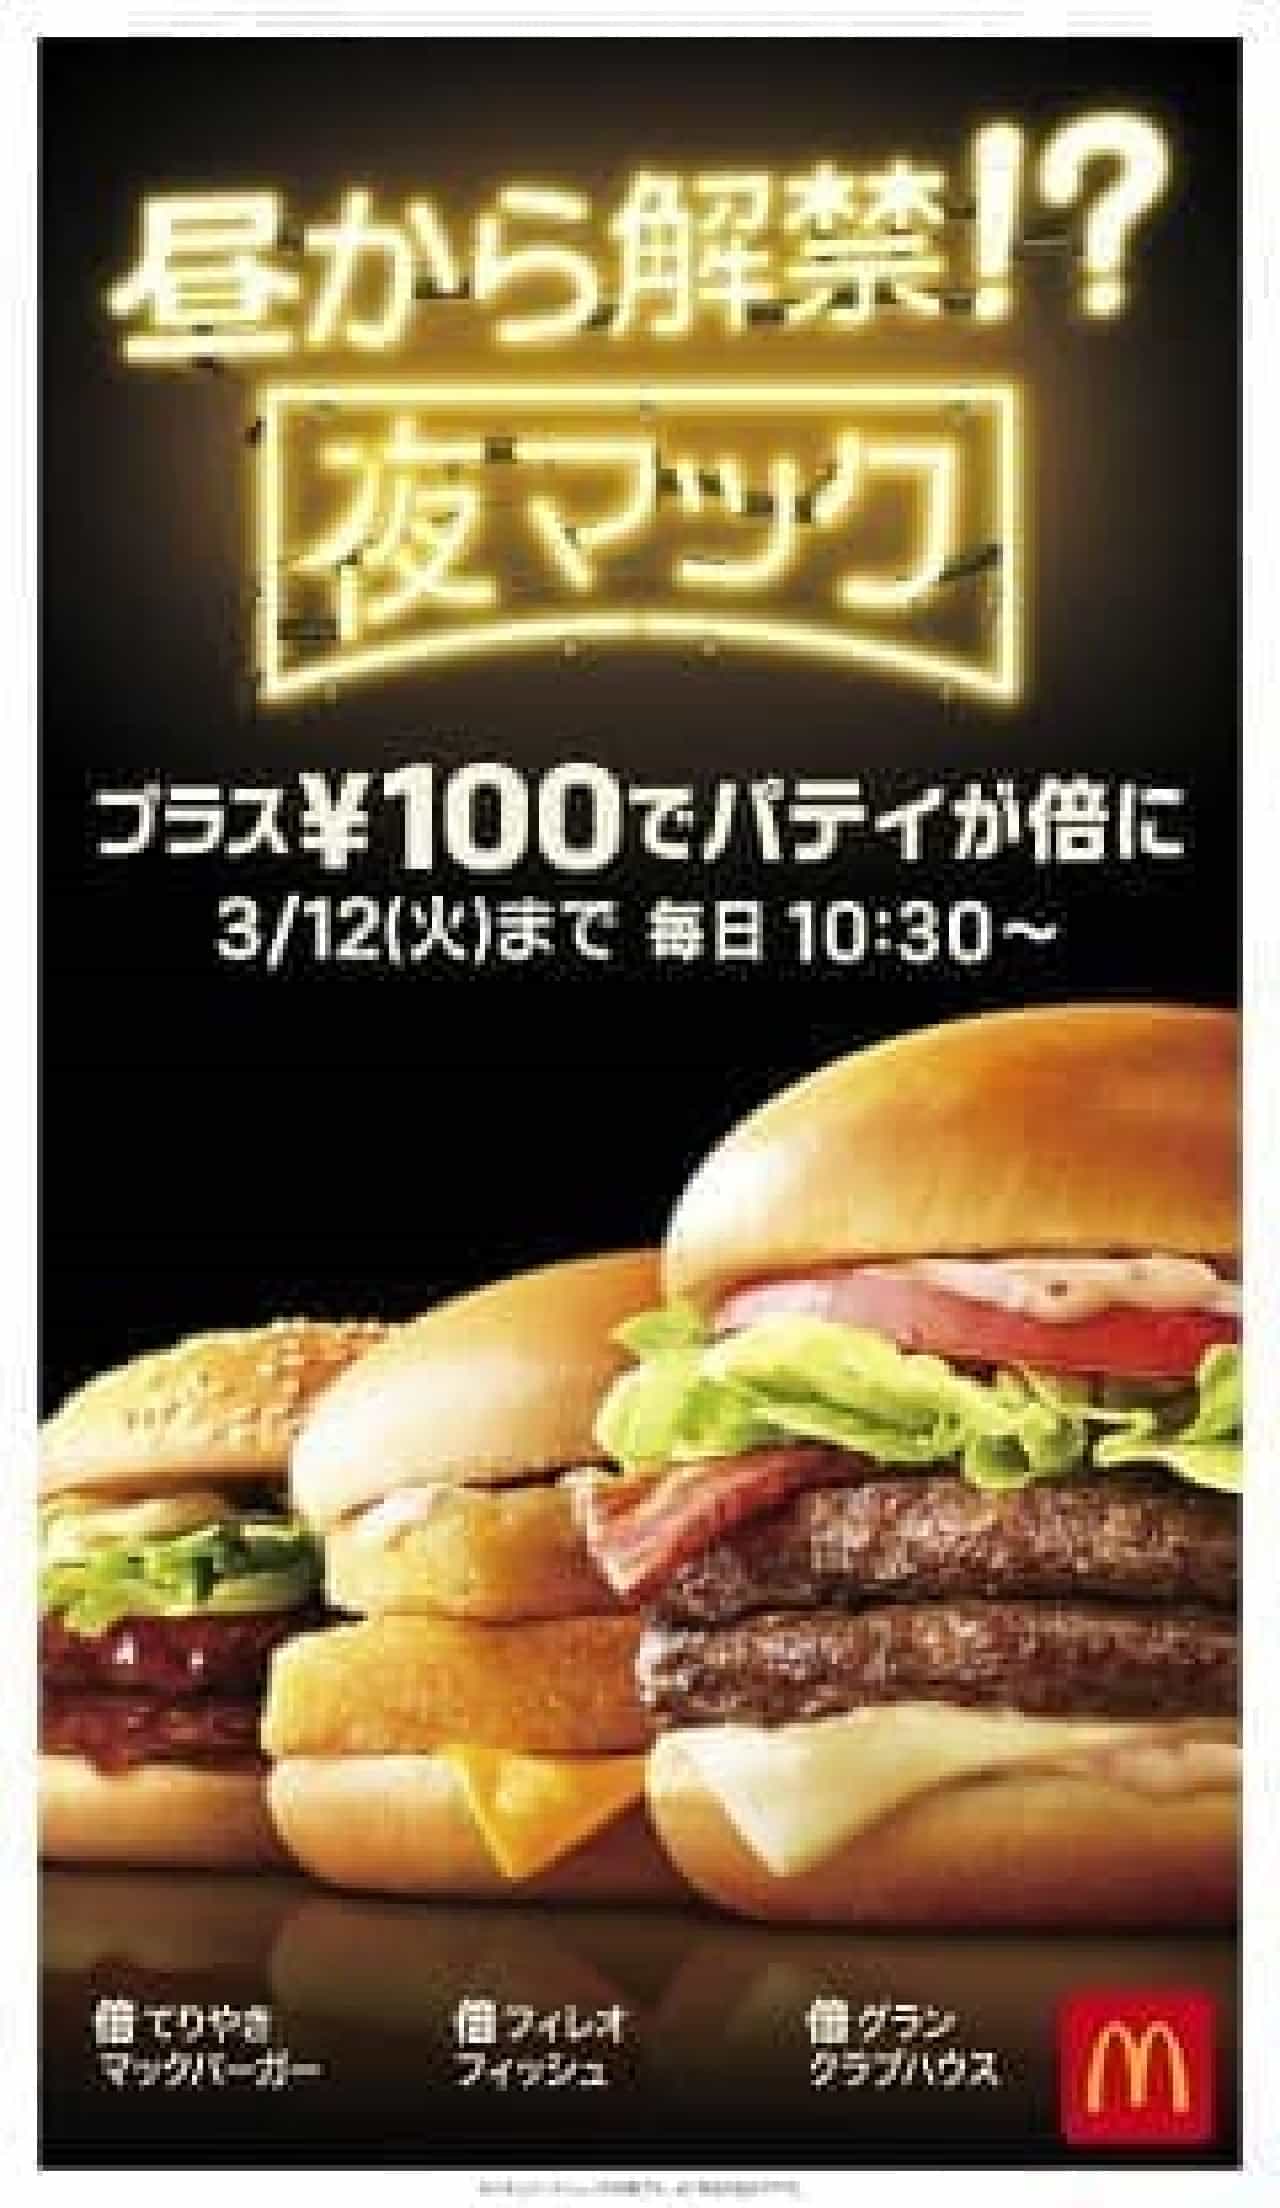 McDonald's "double burger"